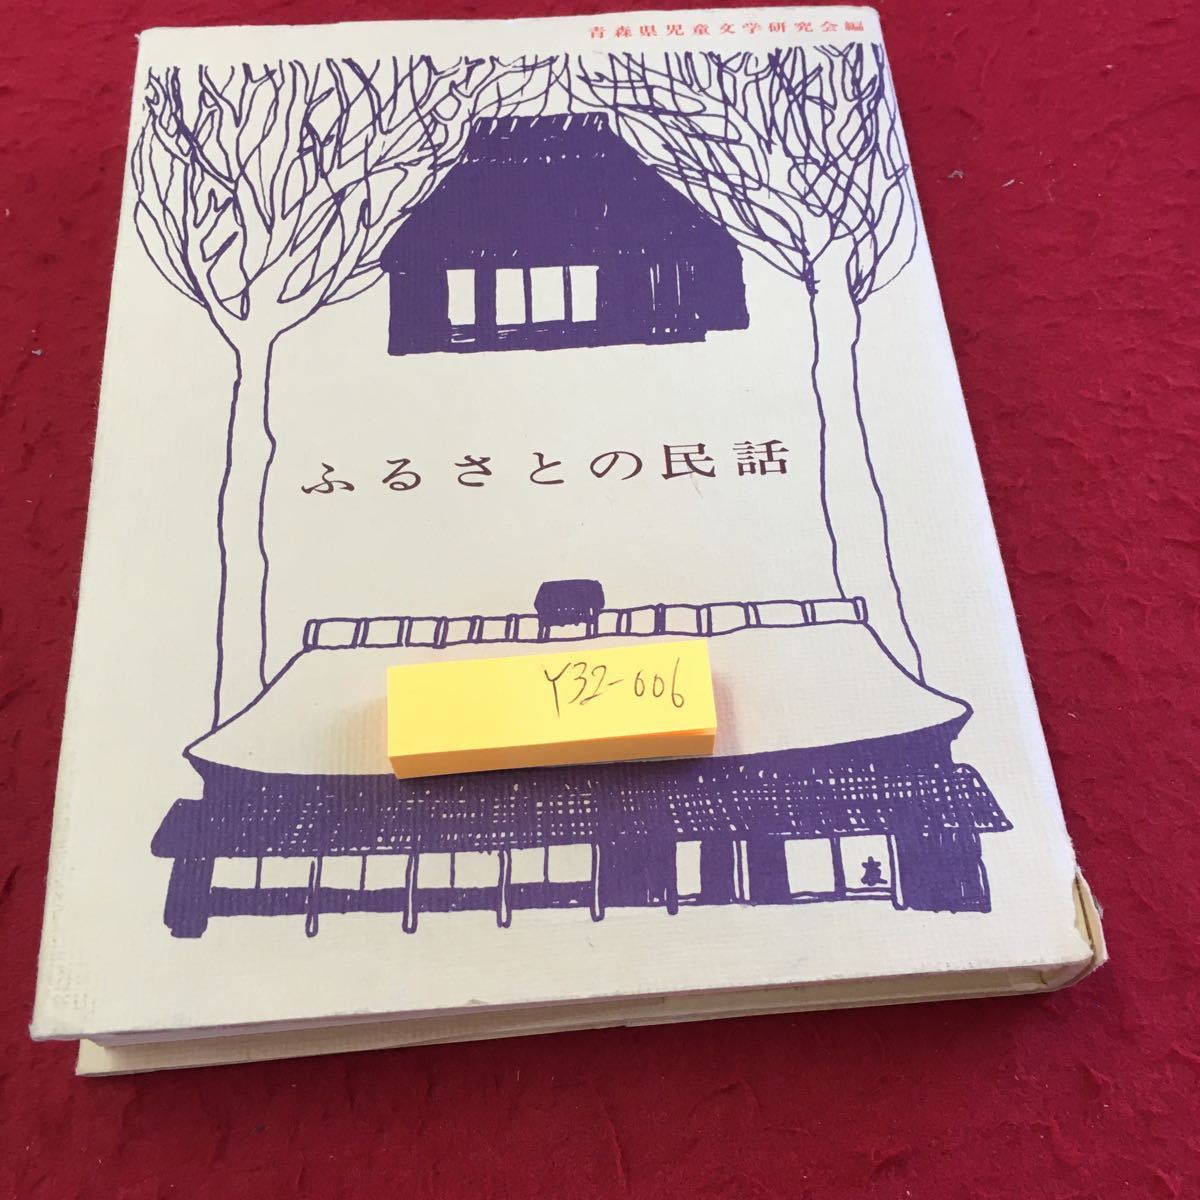 Y32-006..... folk tale Aomori prefecture juvenile literature research . compilation Tsu light bookstore Showa era 55 year issue light. .. g SkyWave. ... sake charcoal . length person s cat tongue poko etc. 